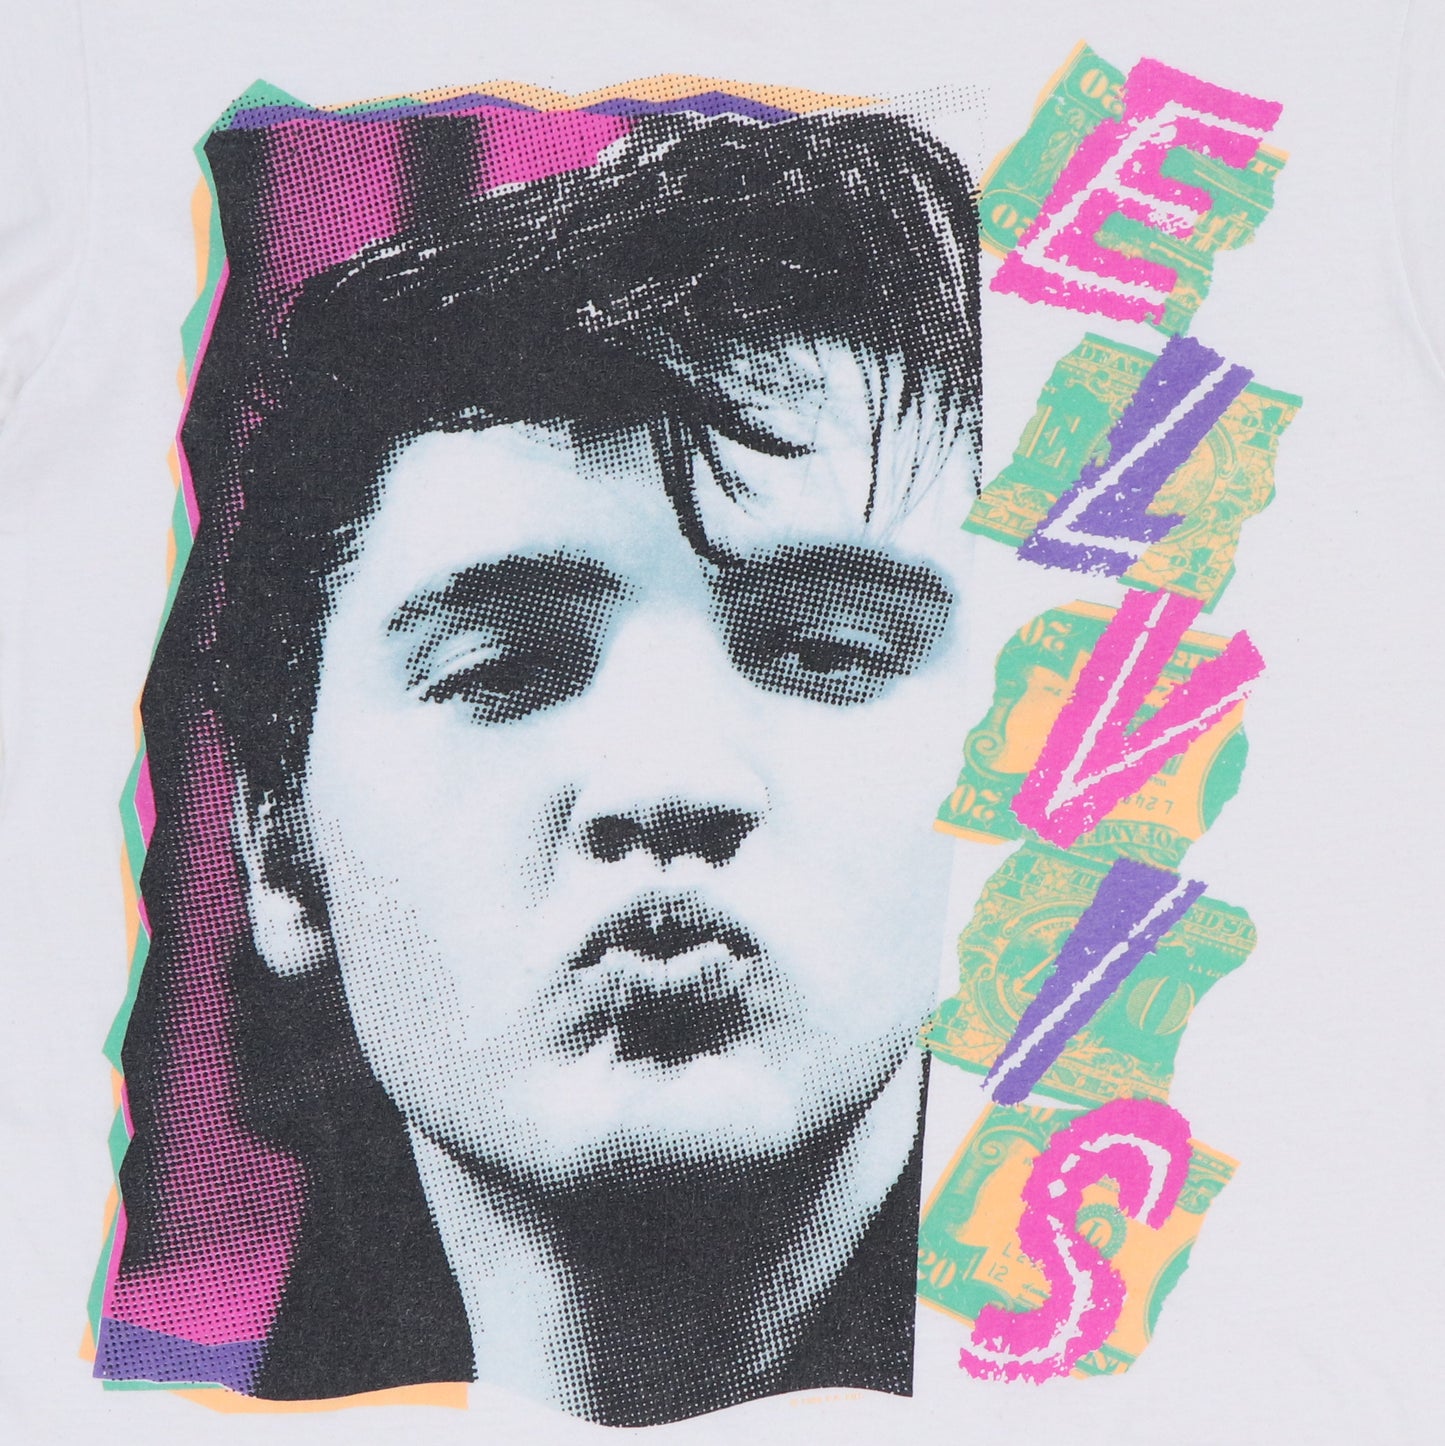 1990 Elvis Presley Oversize Print Shirt